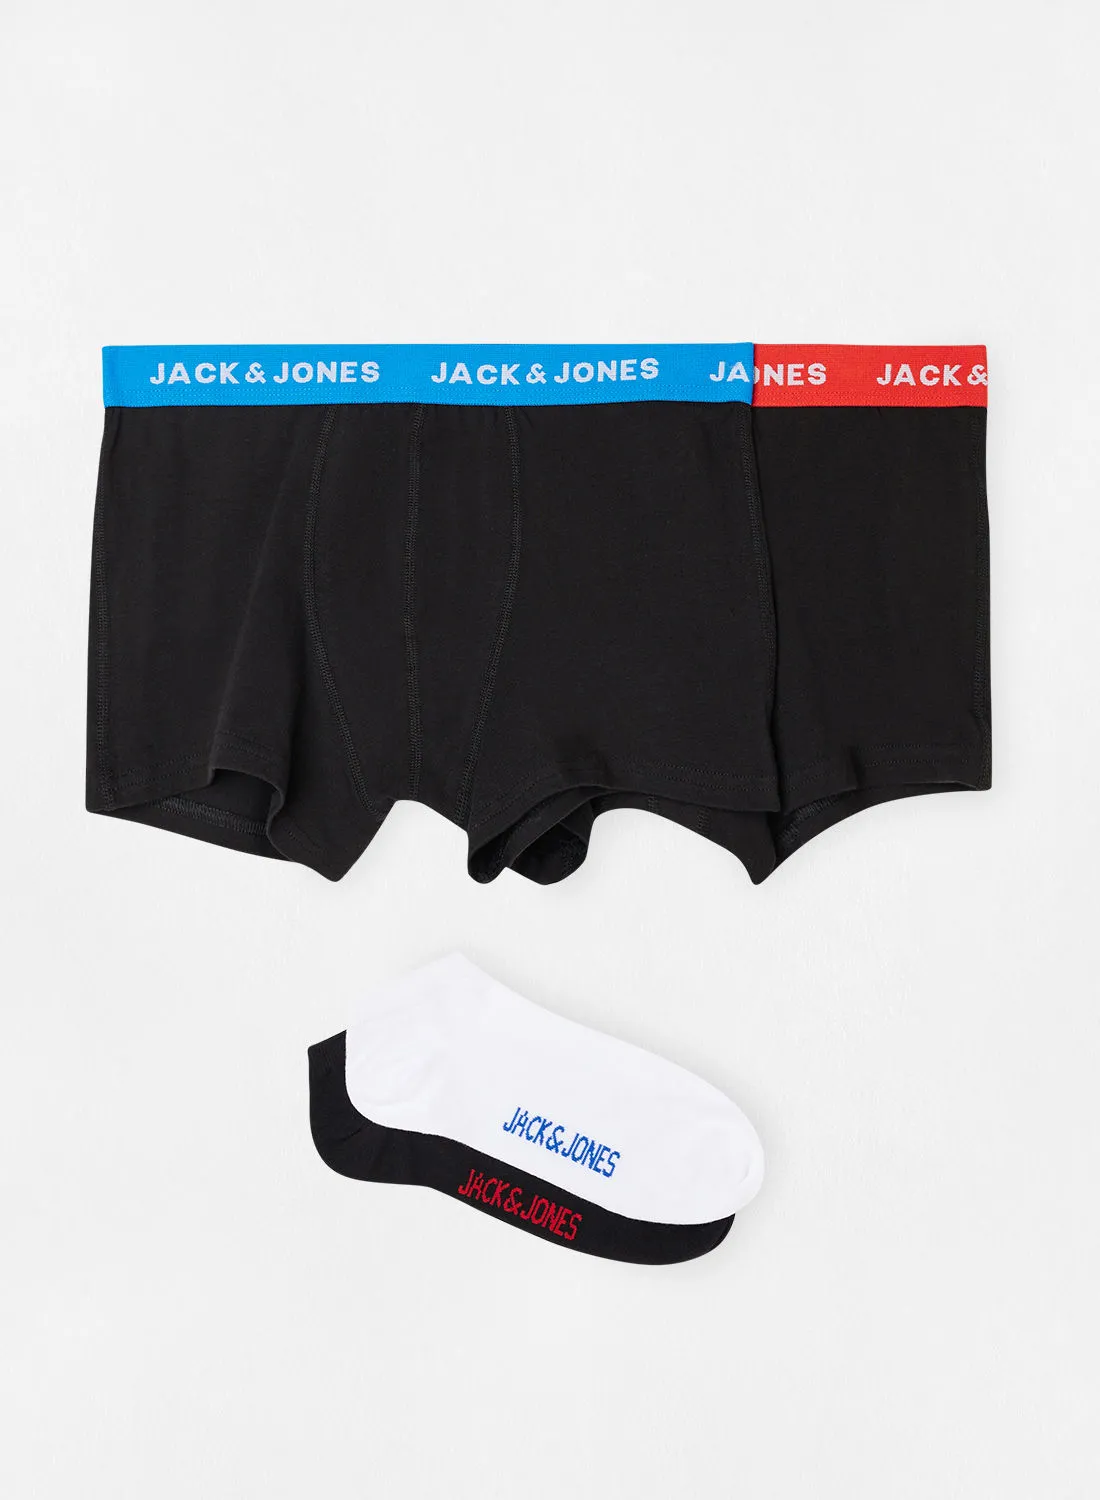 JACK & JONES Assorted Socks & Trunks Set